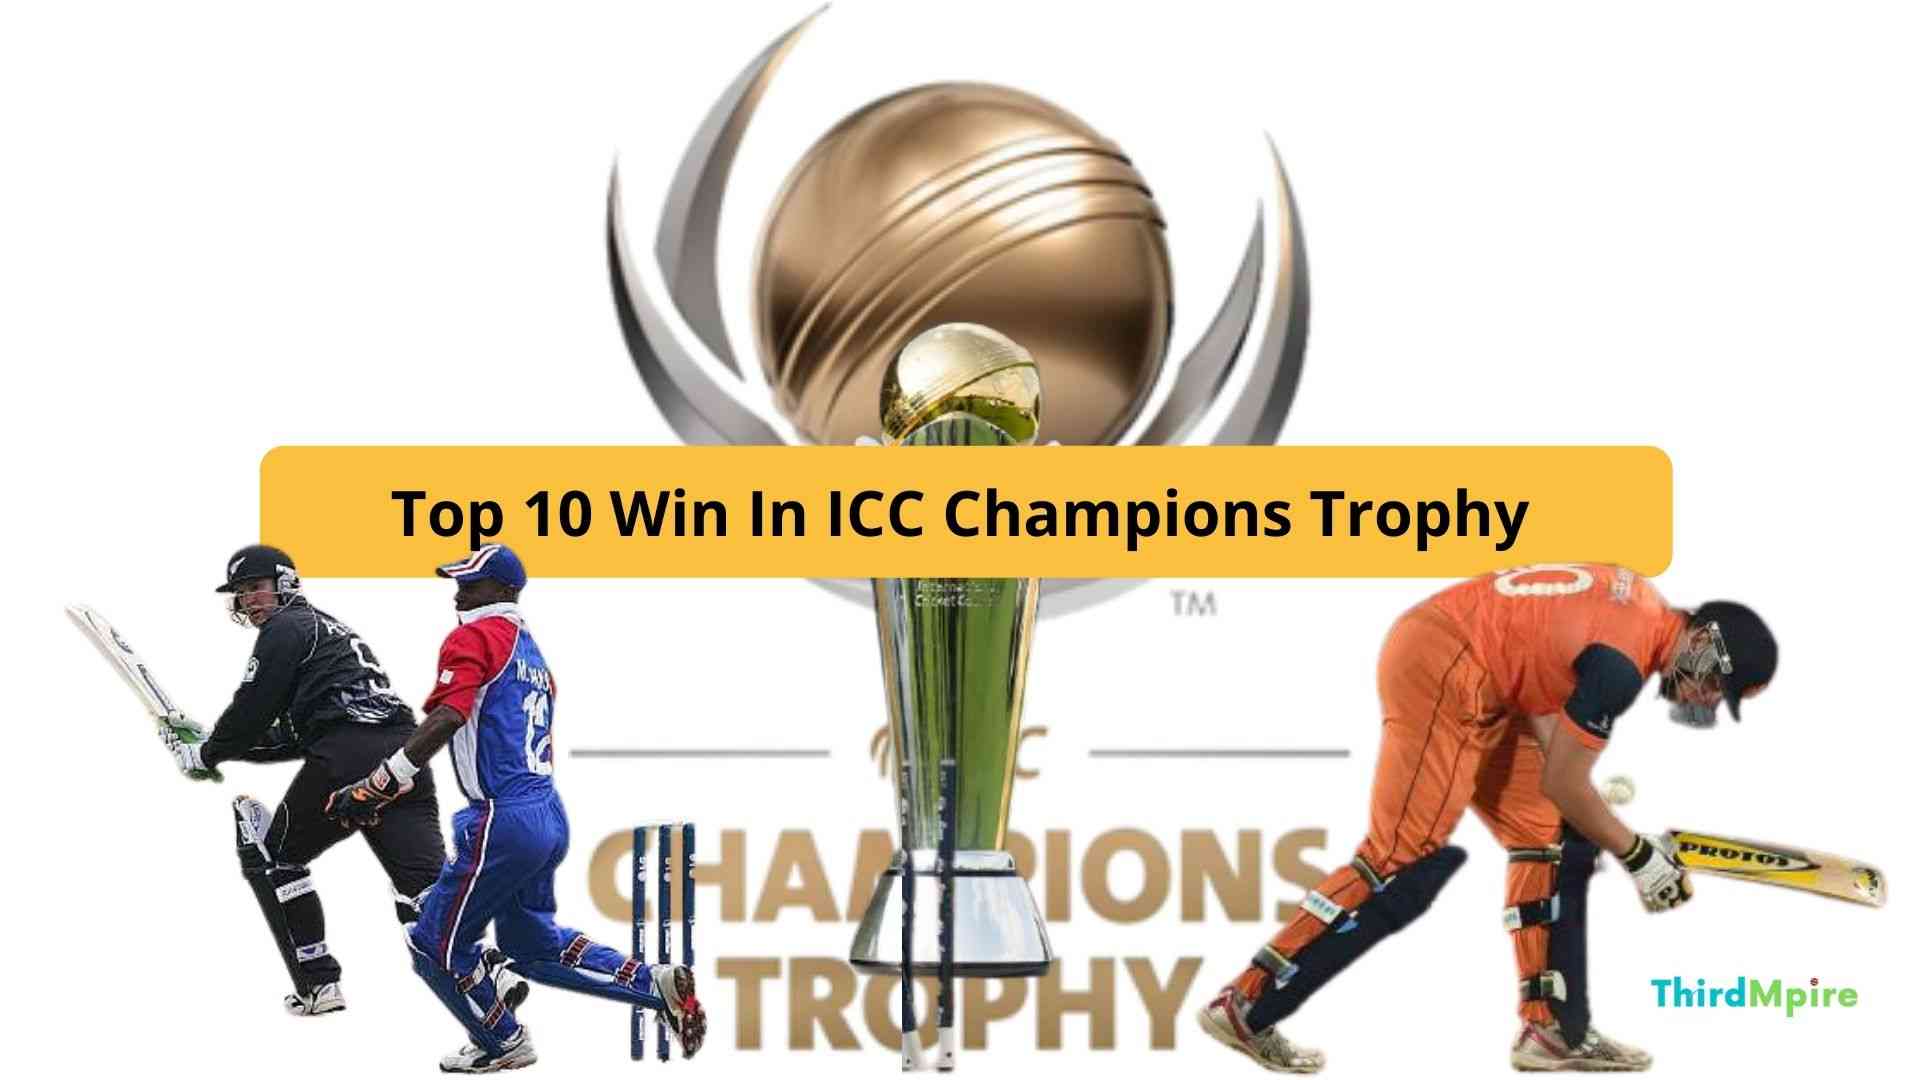 Top 10 win in ICC Champions Trophy